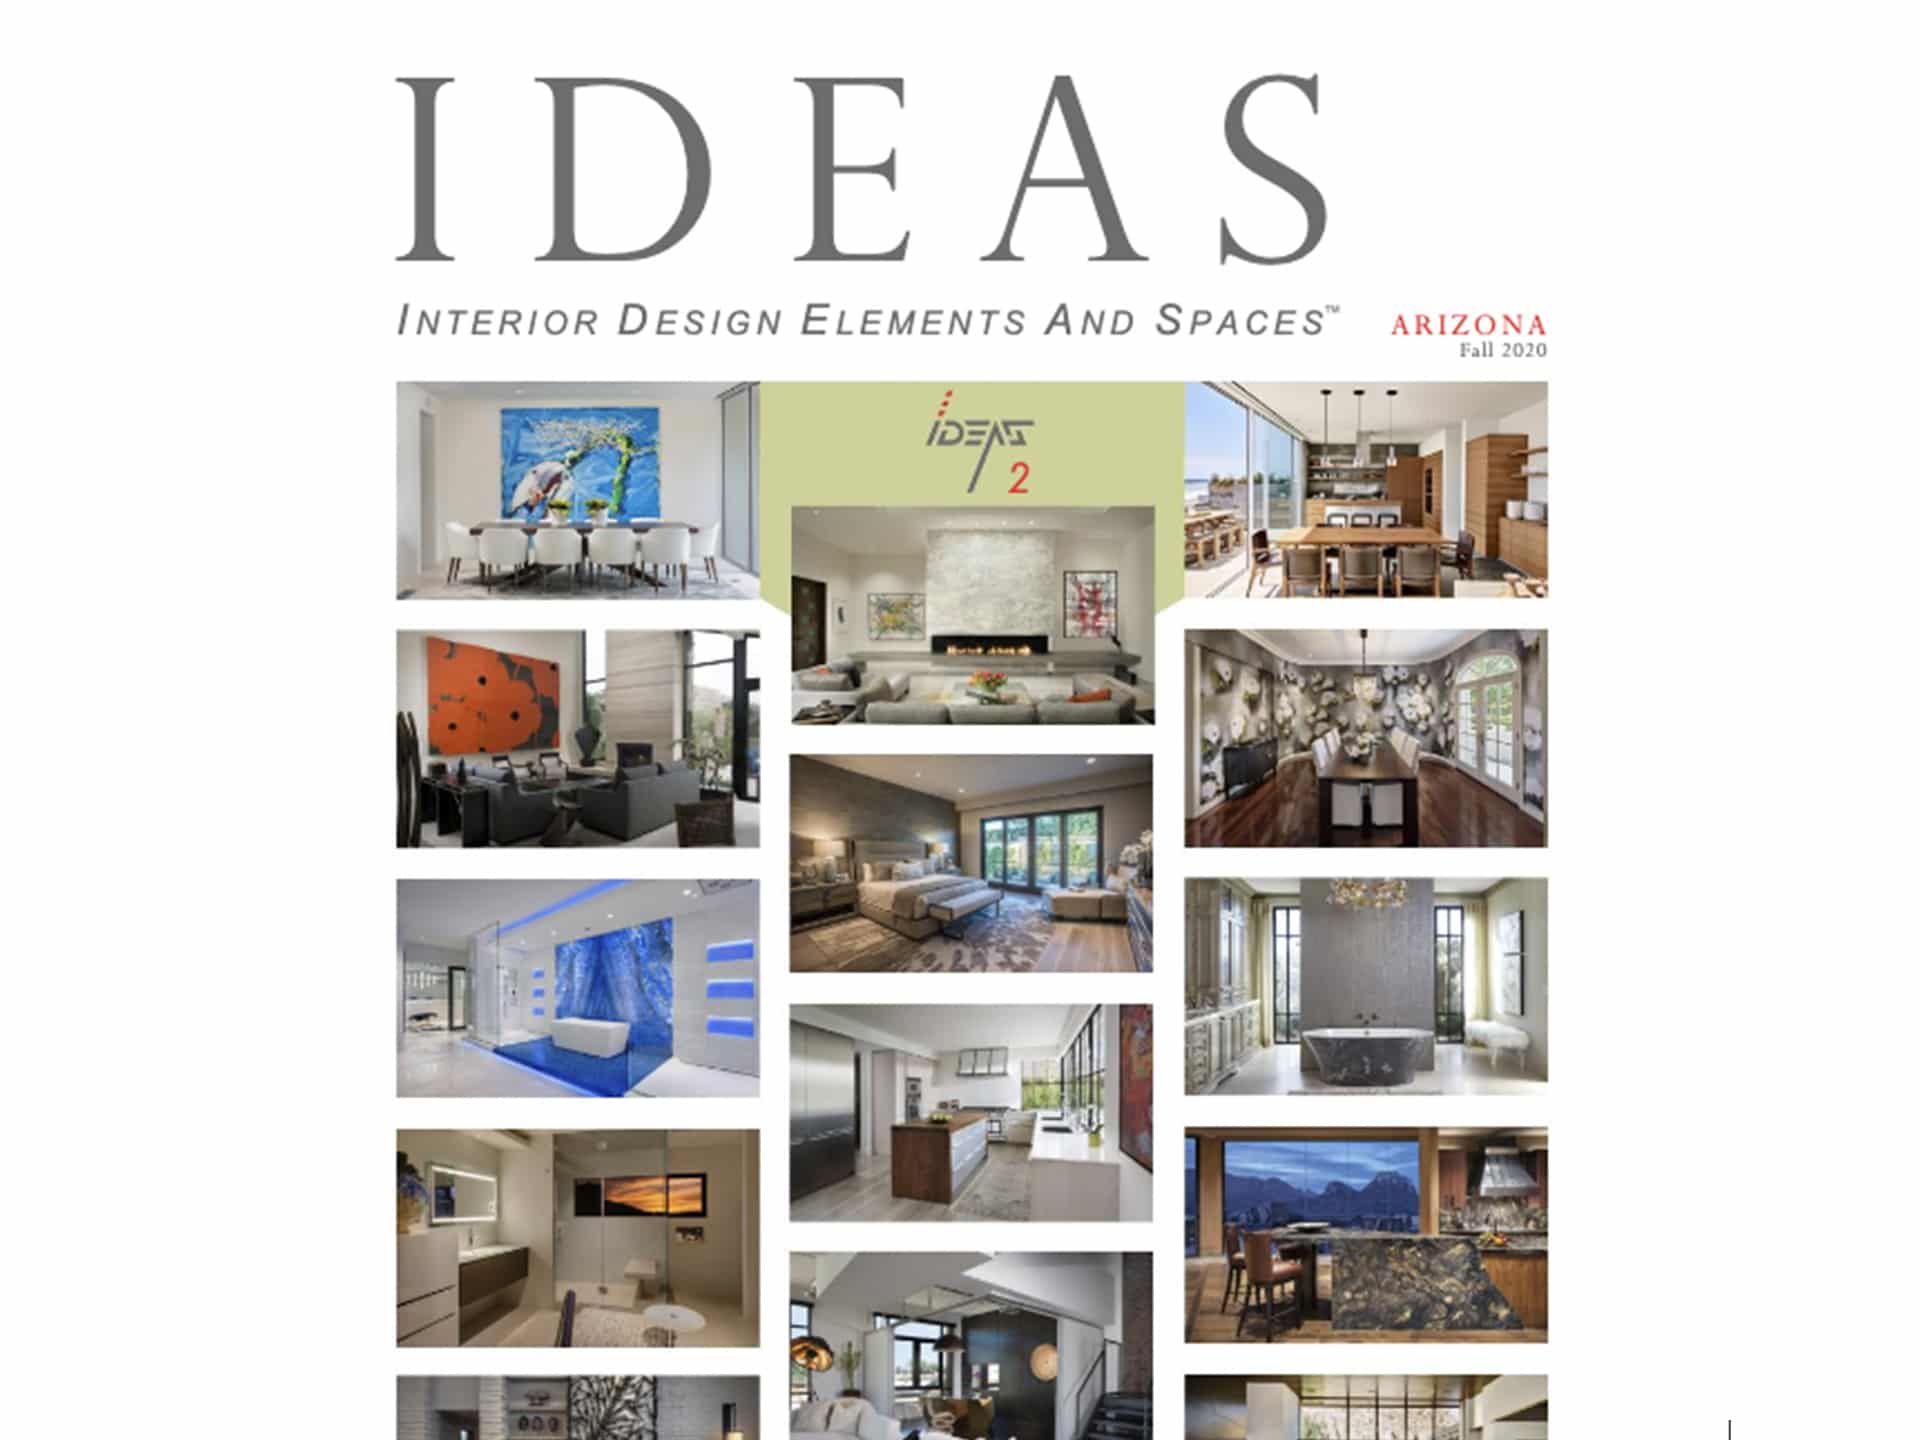 Interior Design Elements and Spaces